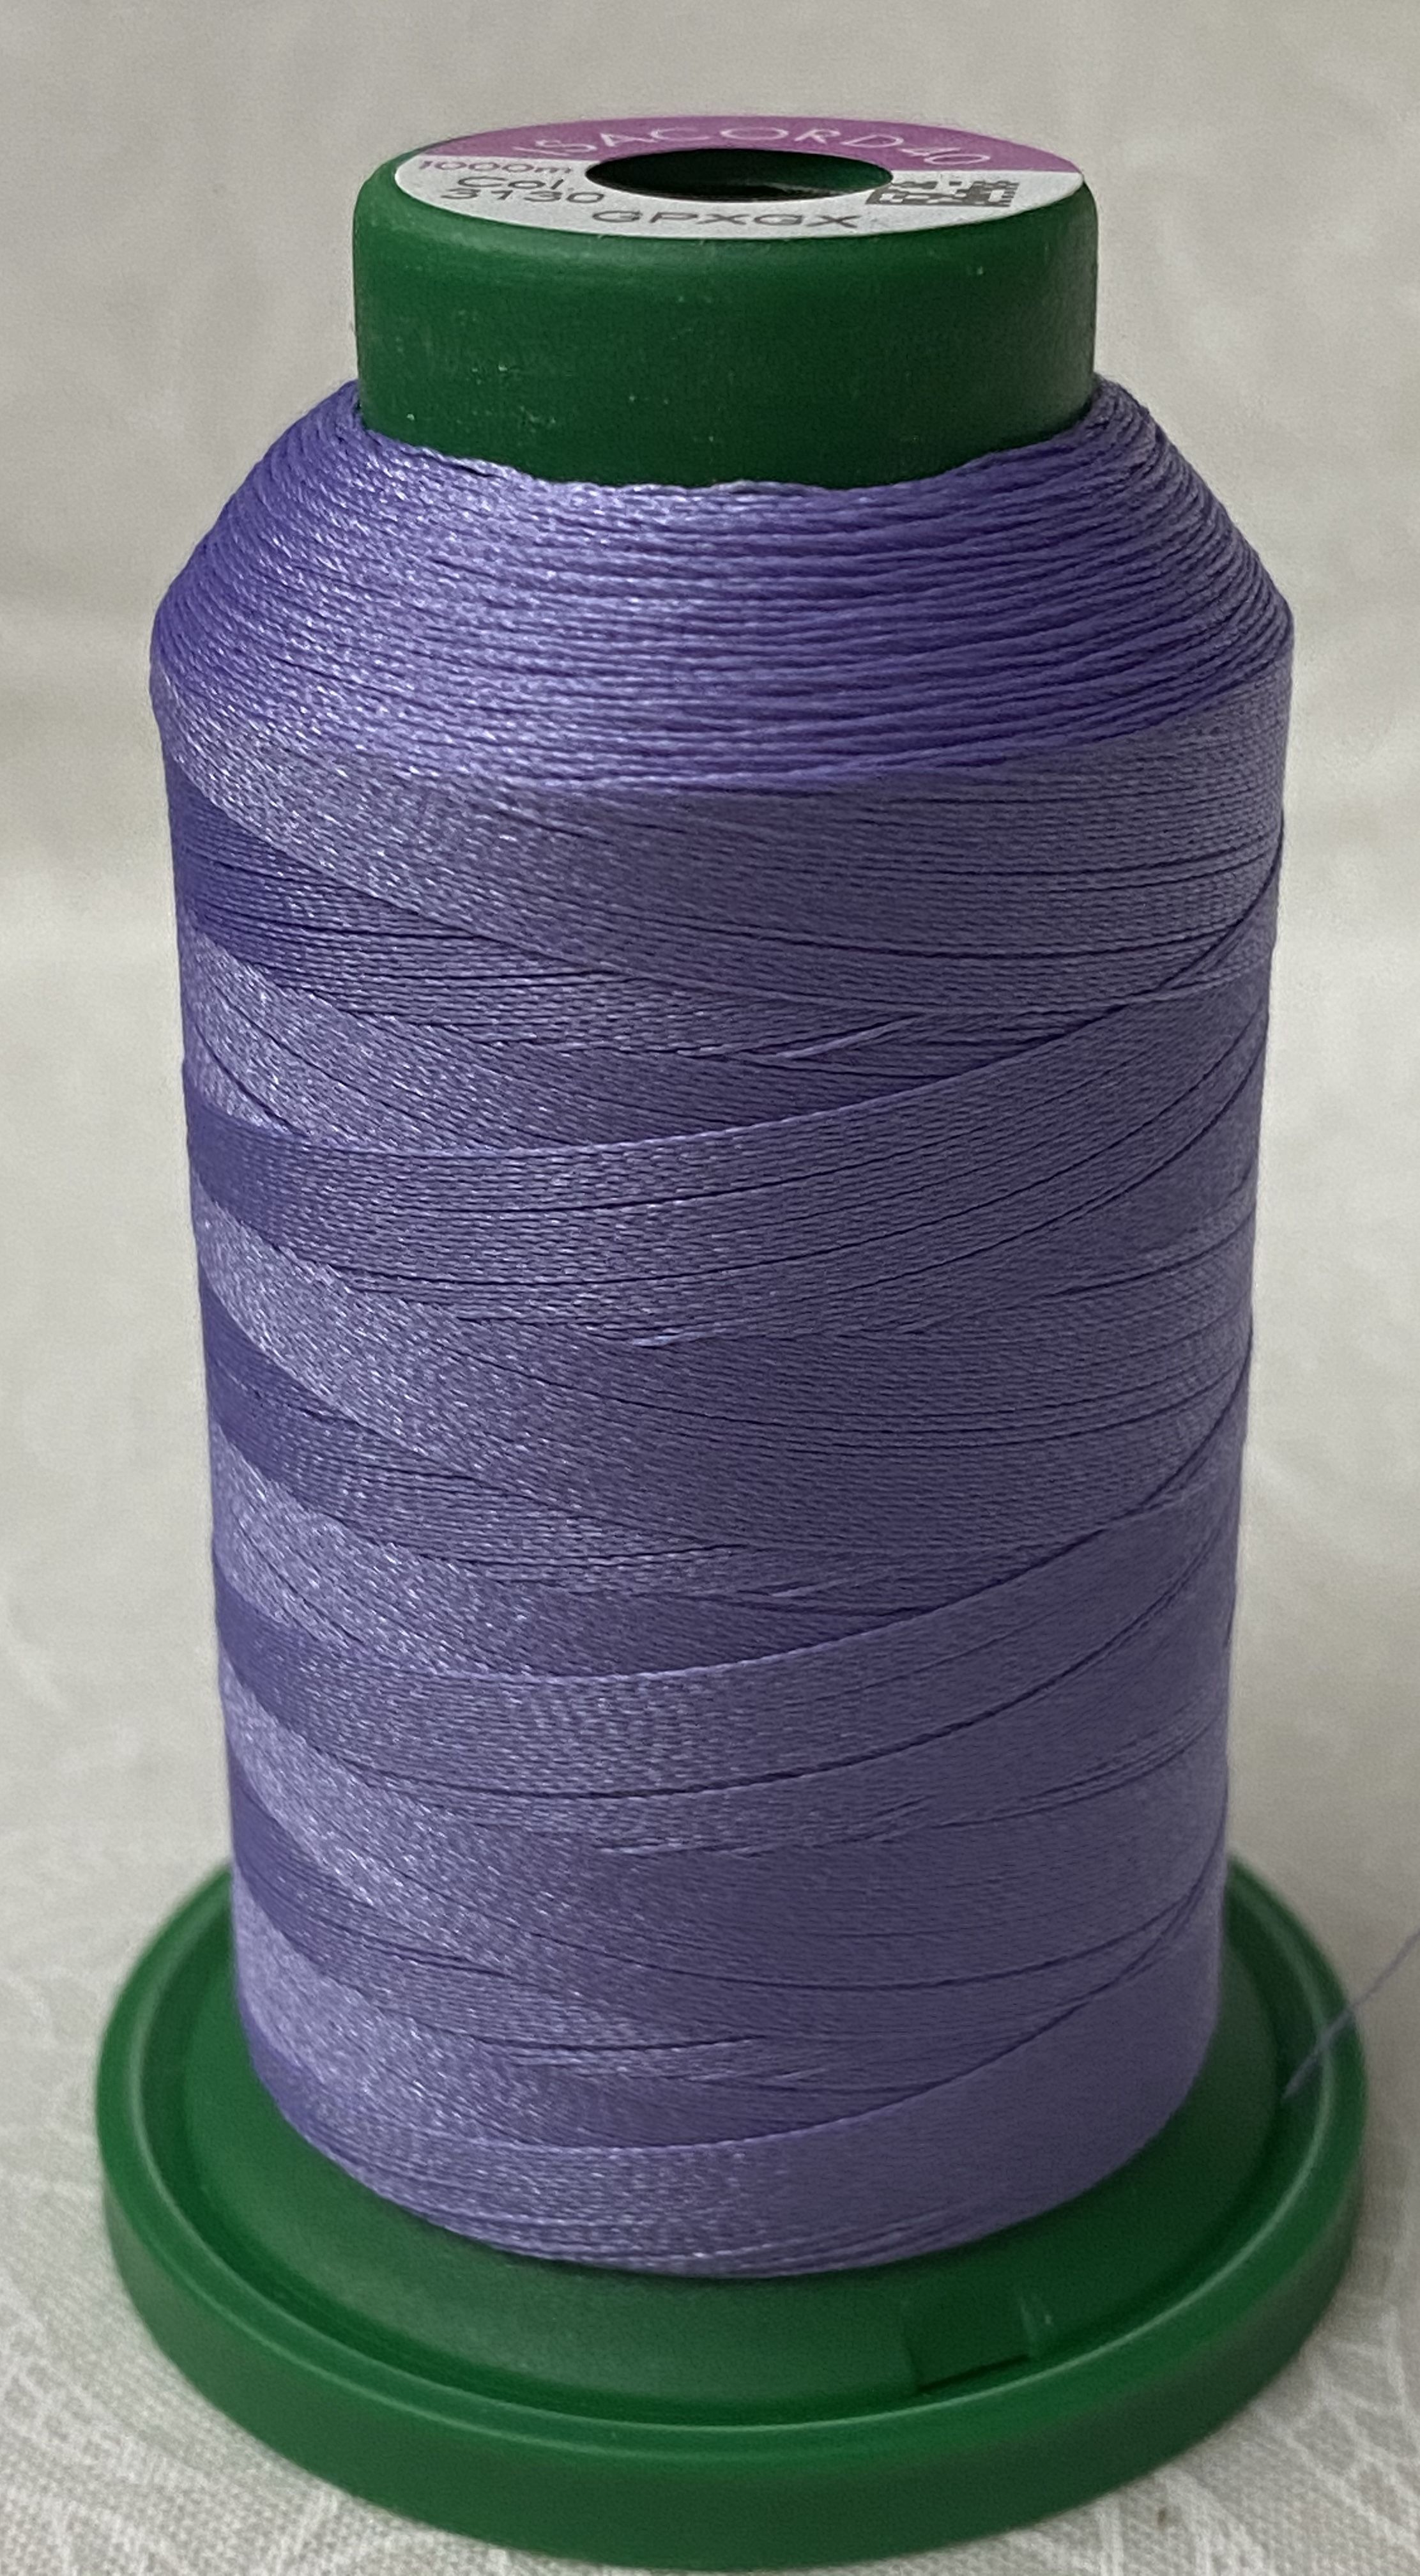 3130 Dawn of Violet Isacord Thread